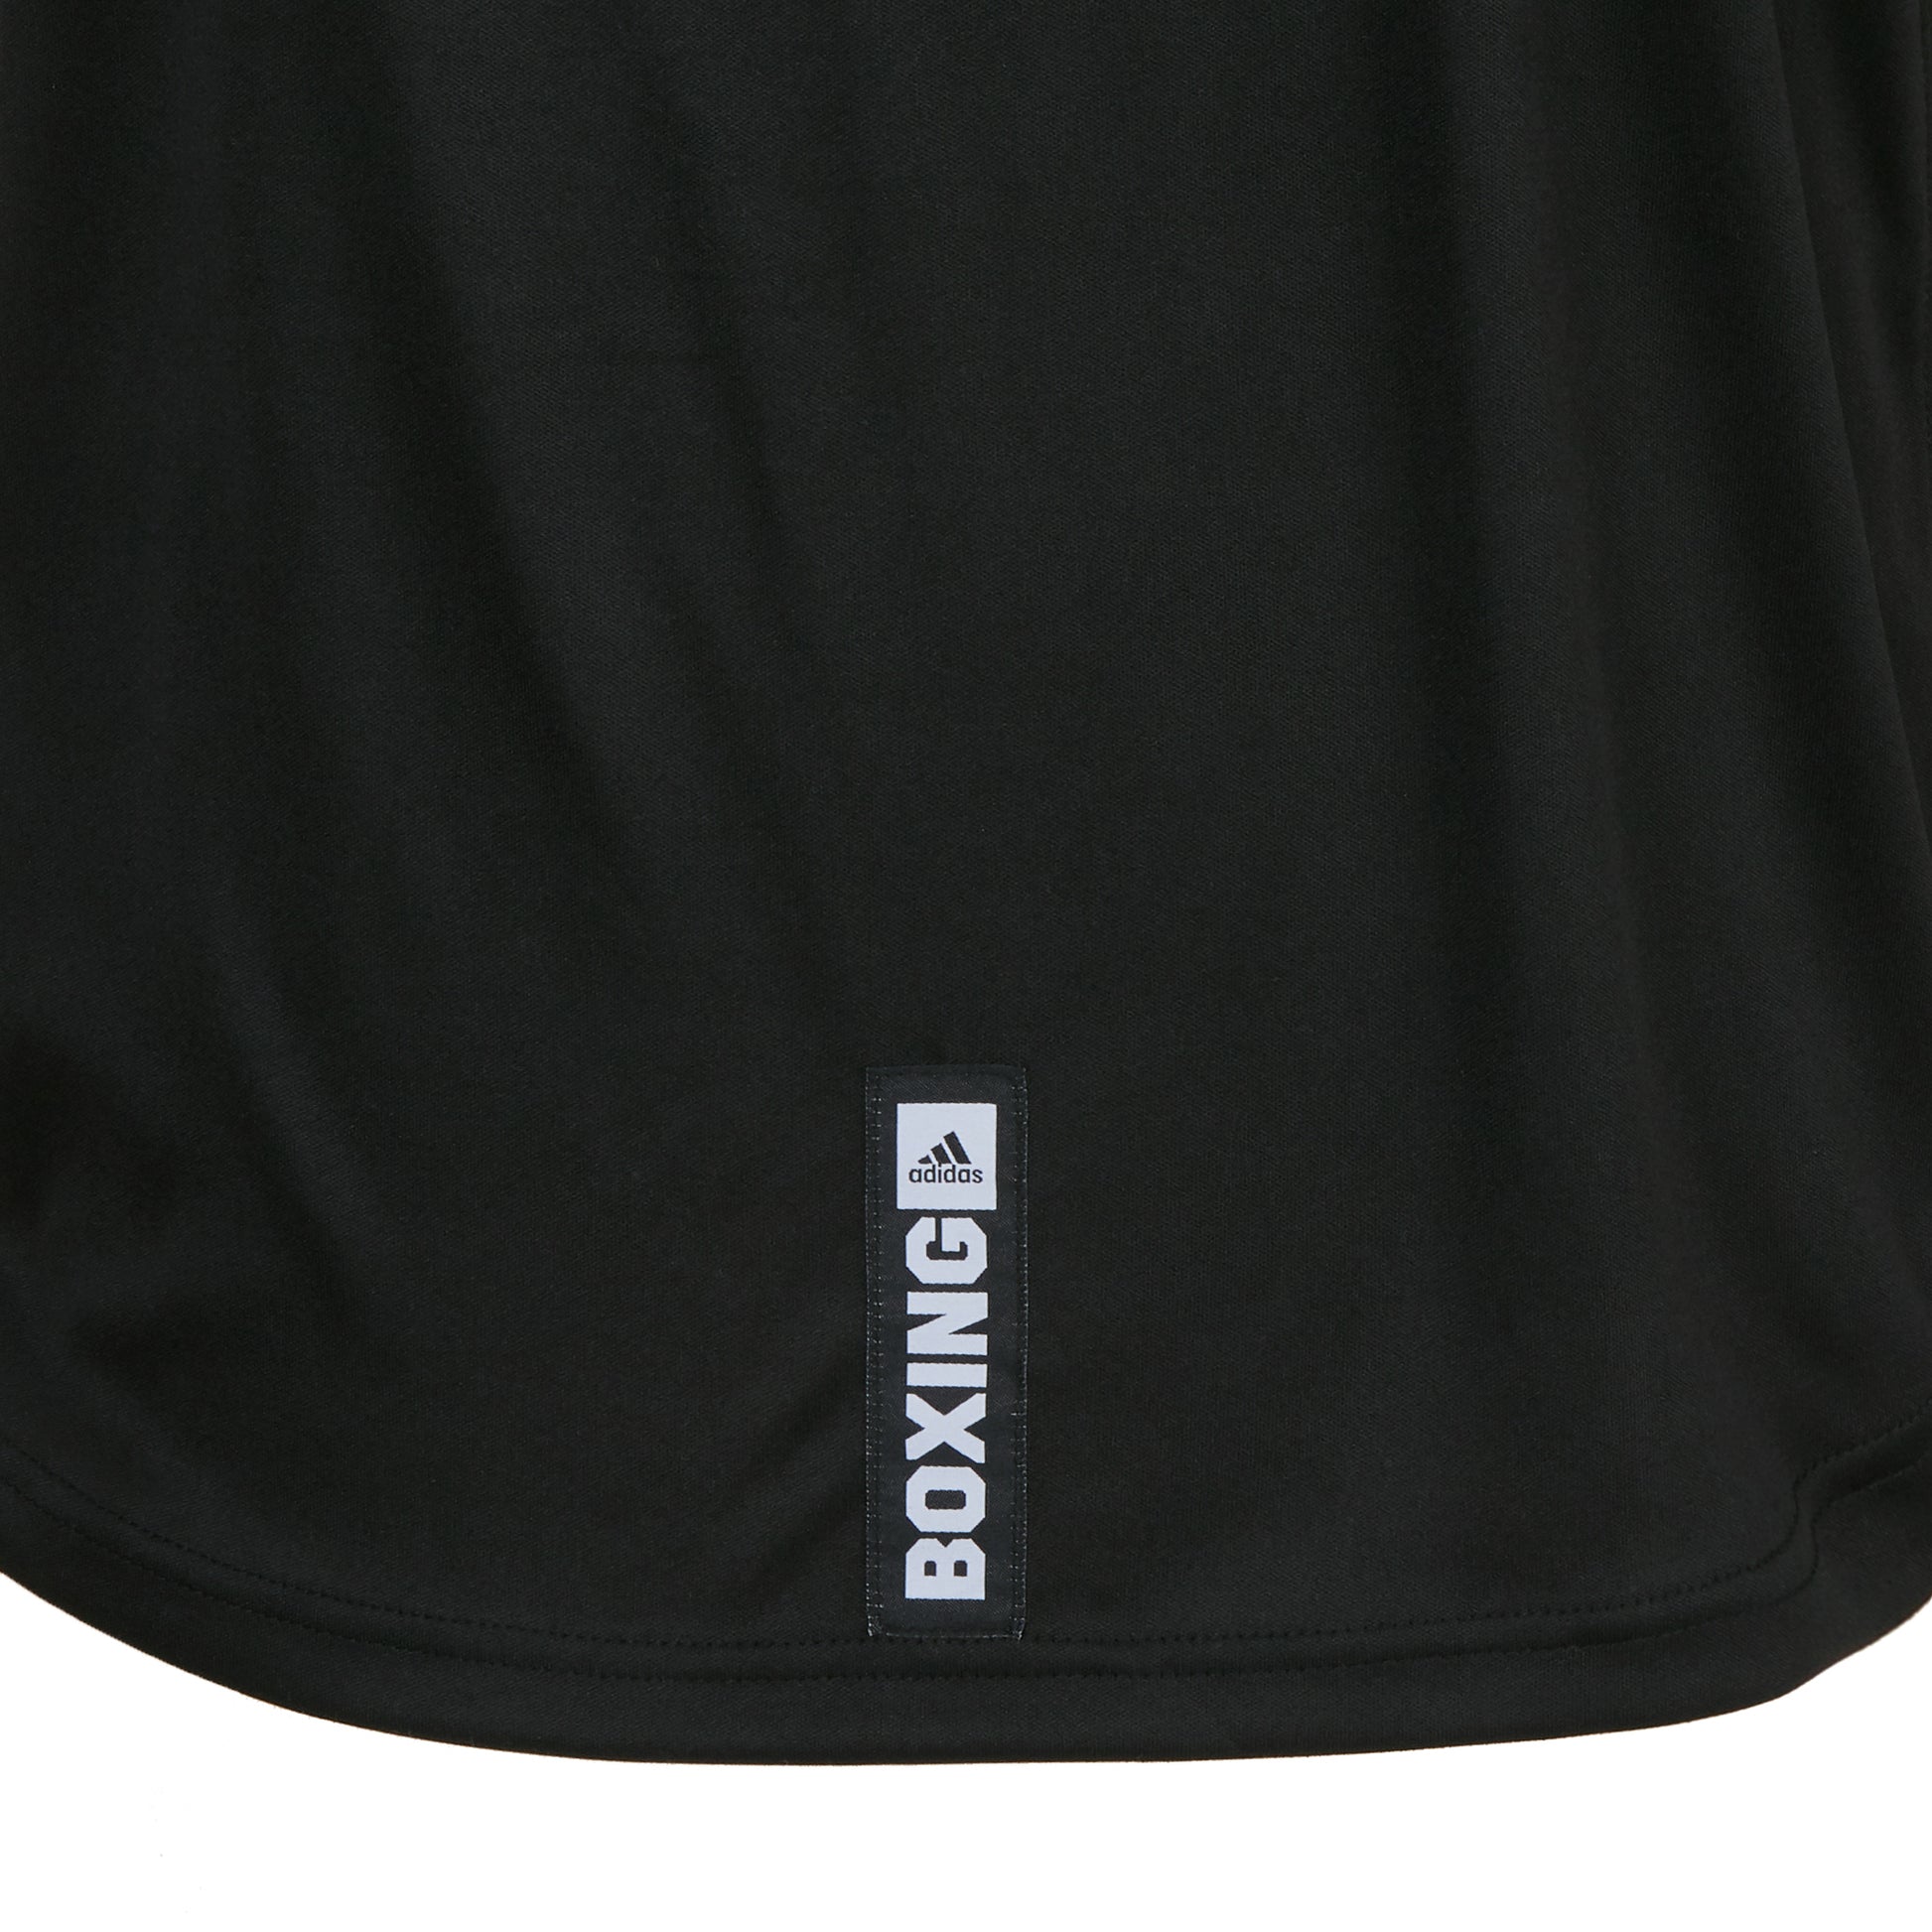 Bxwtts01 Adidas Boxwear Tech T Shirt Black 07